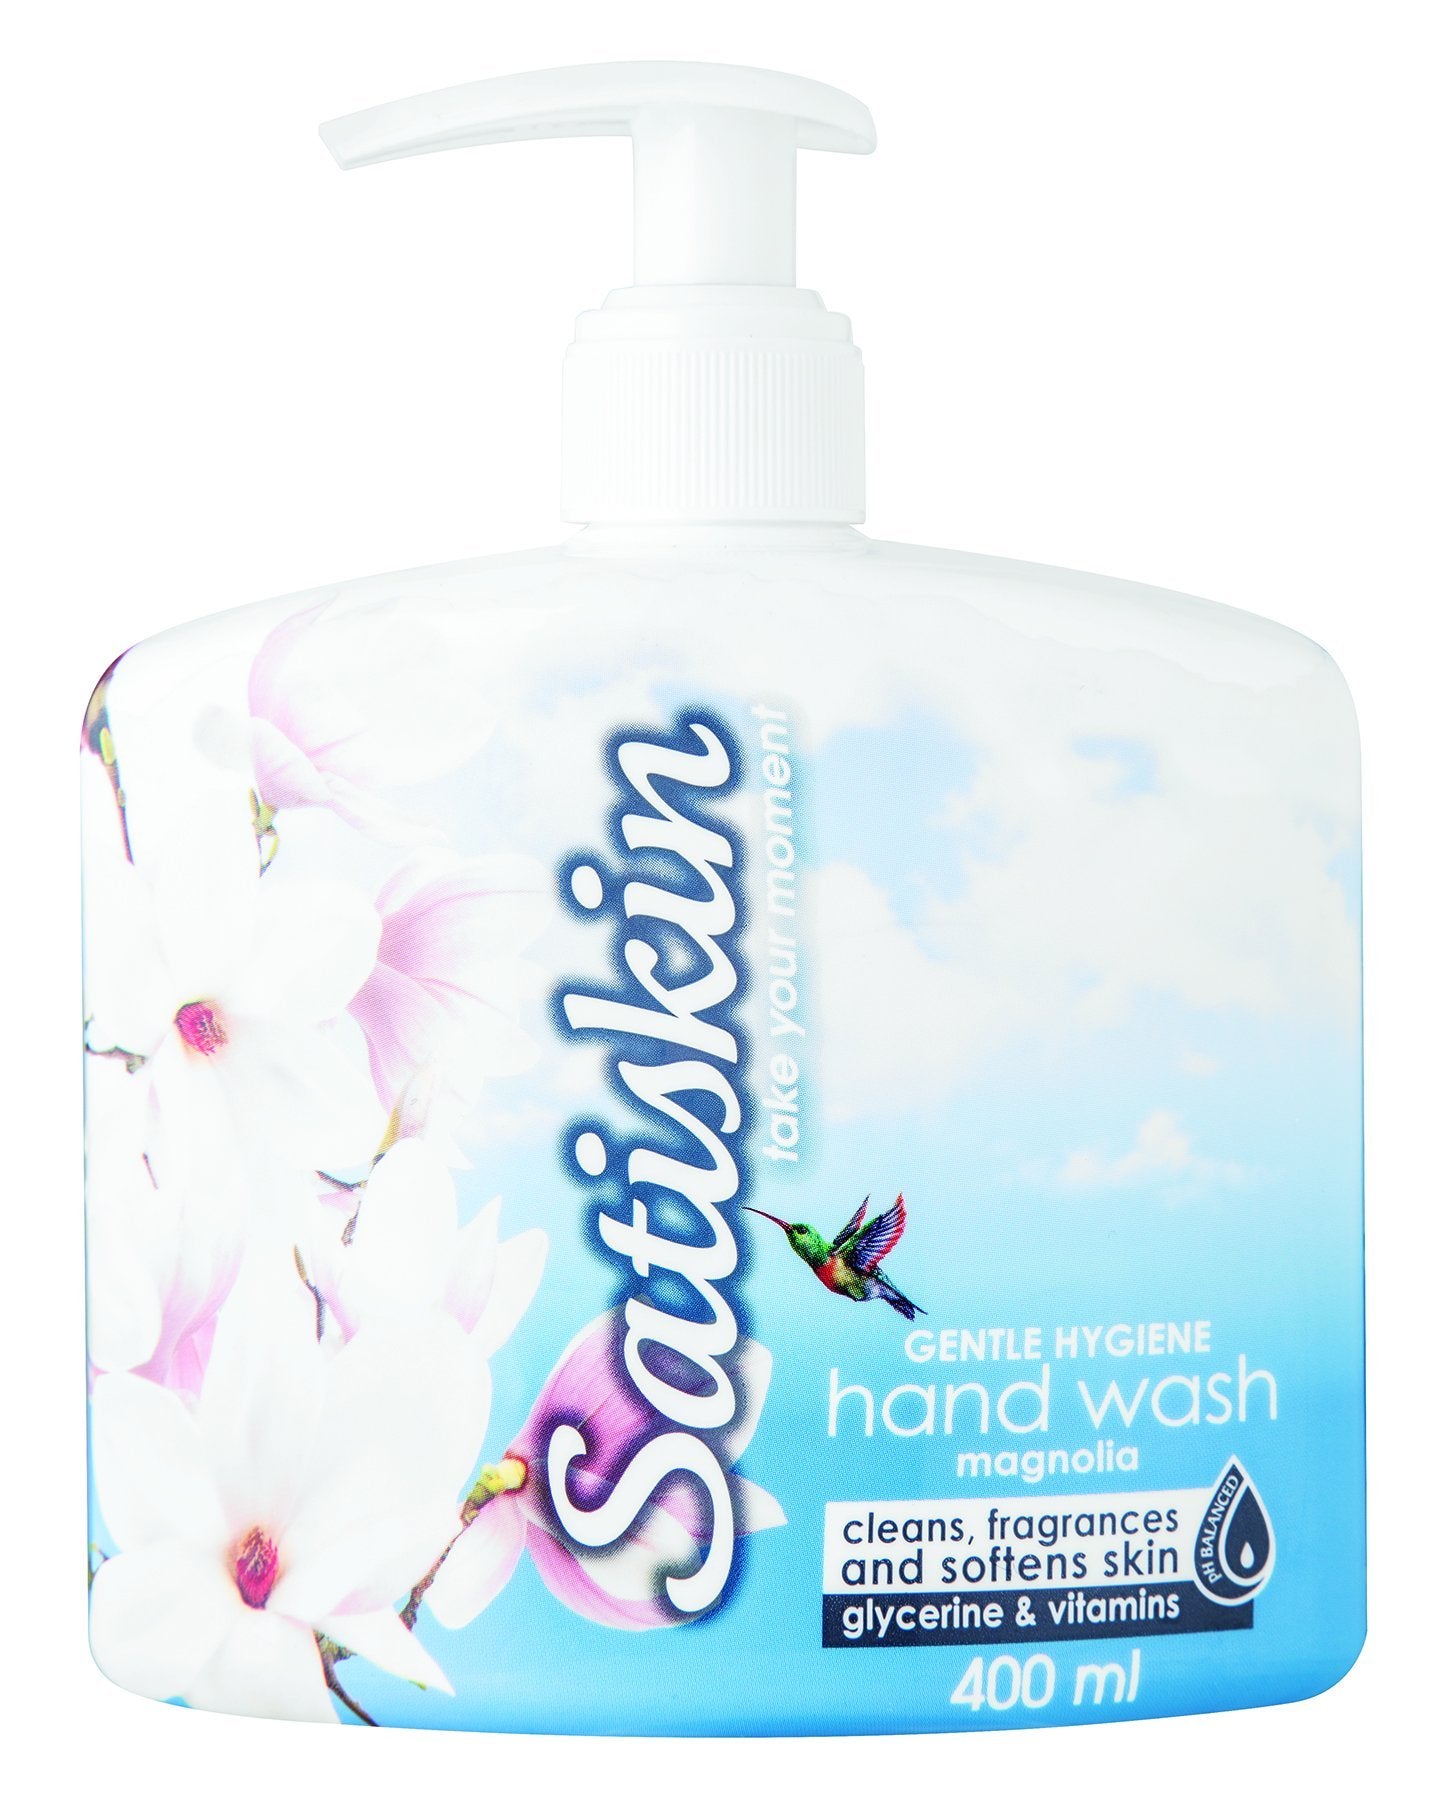 Satiskin Hand Wash - White Magnolia Crème - 400ml 12-Pack